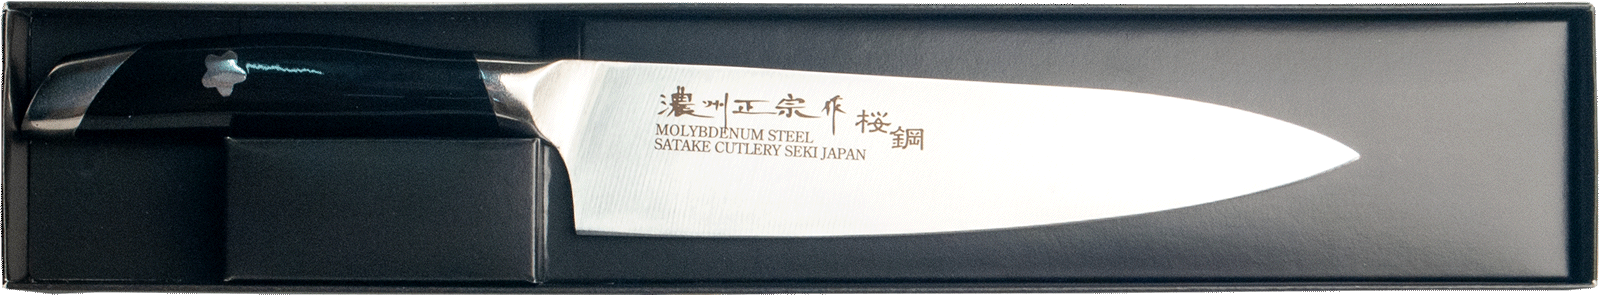 Couteau Gyutou Couteau japonais, Satake 0